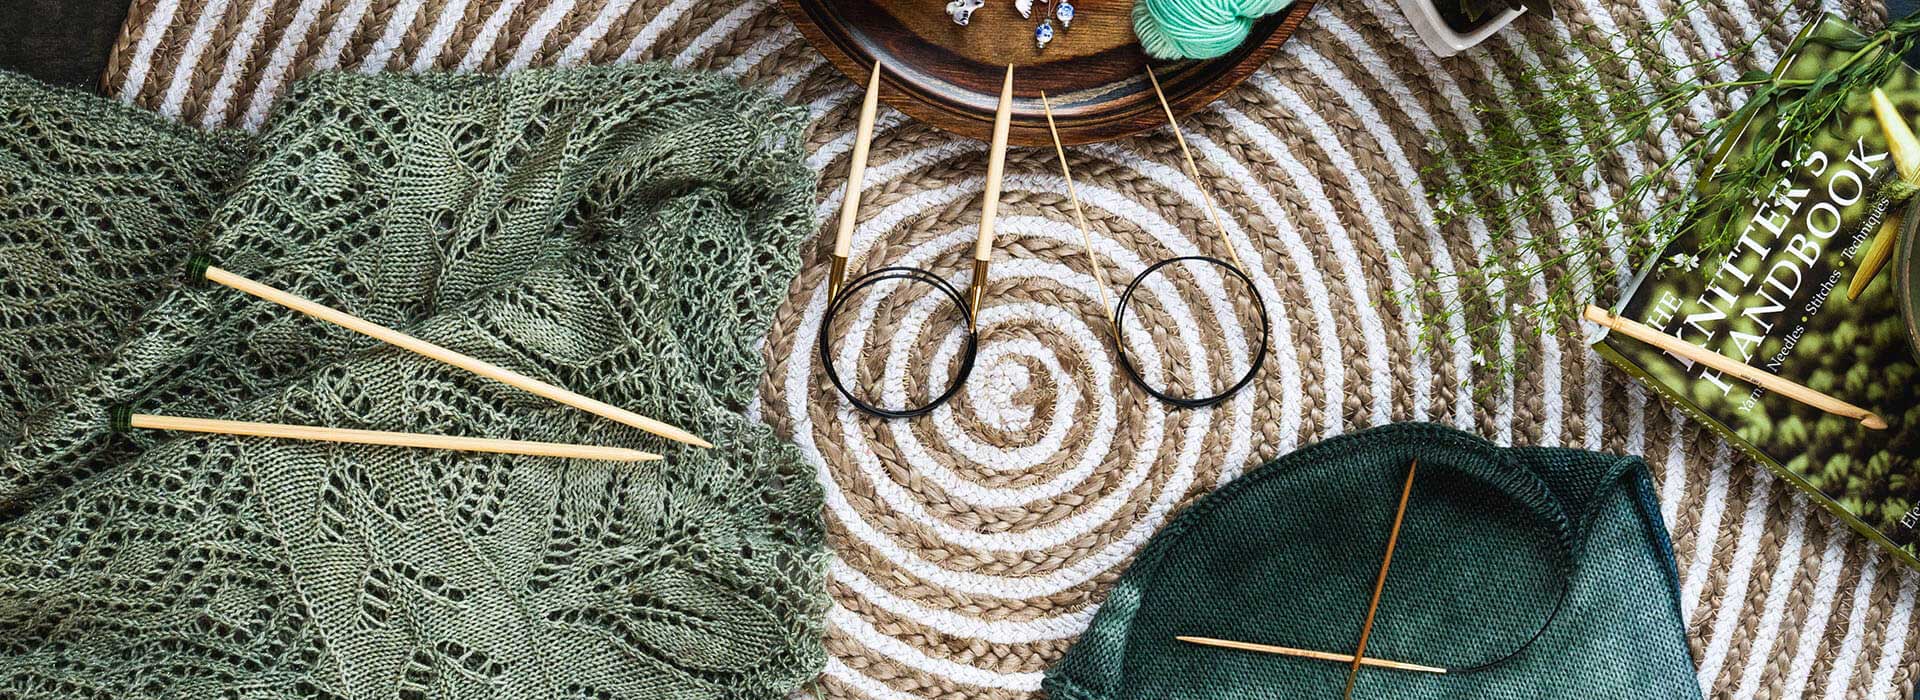 Cocoknits Bamboo Cable Needles - Knitting Tools